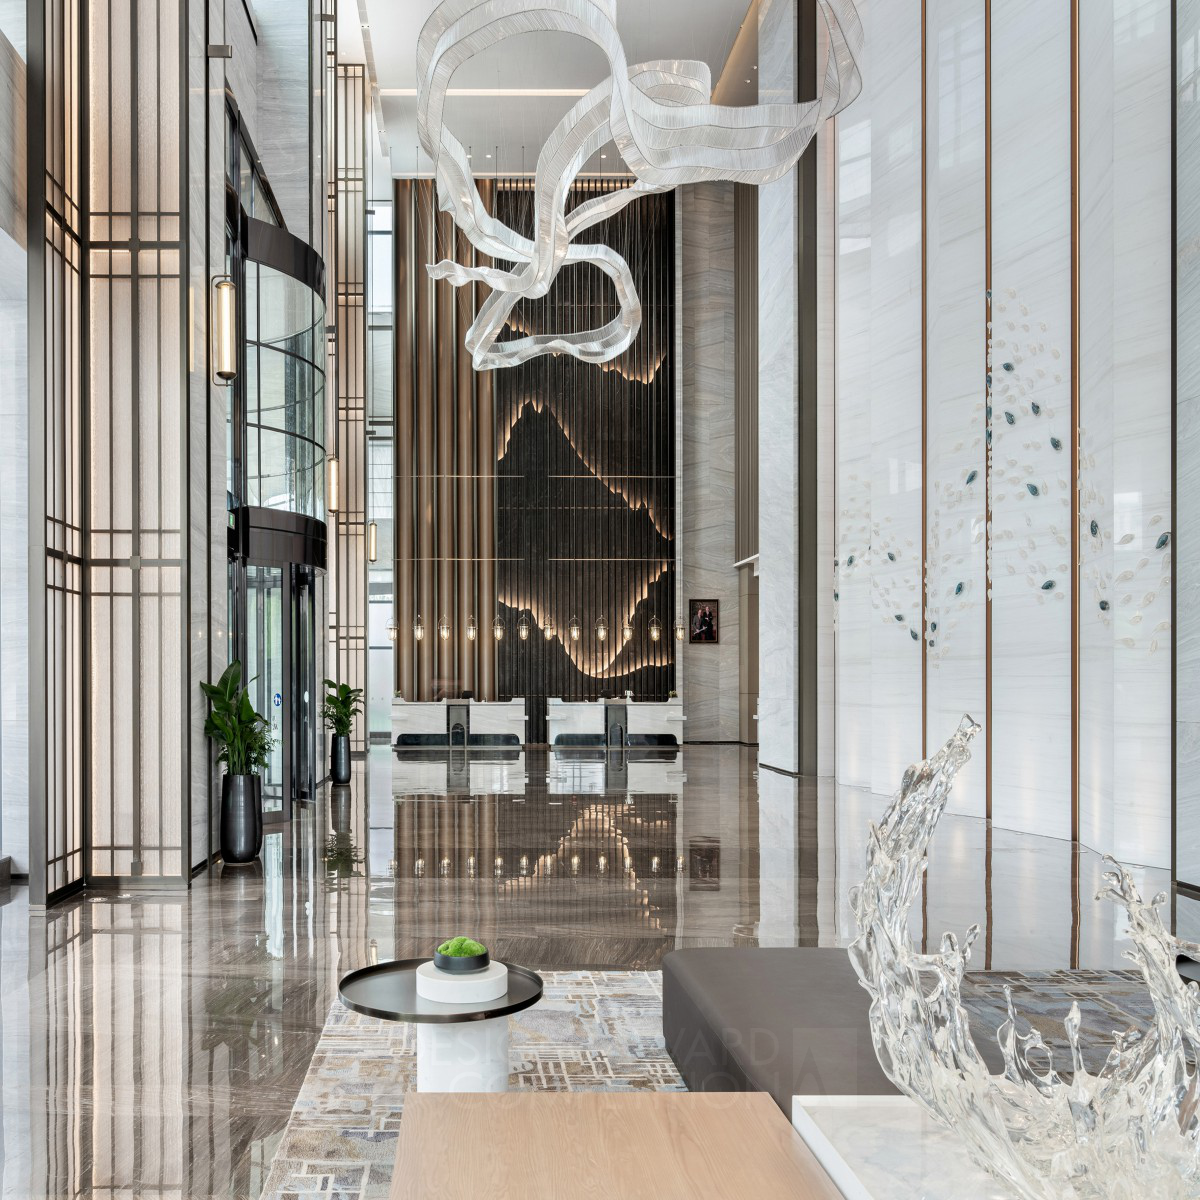 Zhangjiagang Marriott Hotel <b>Hospitality Interior Design